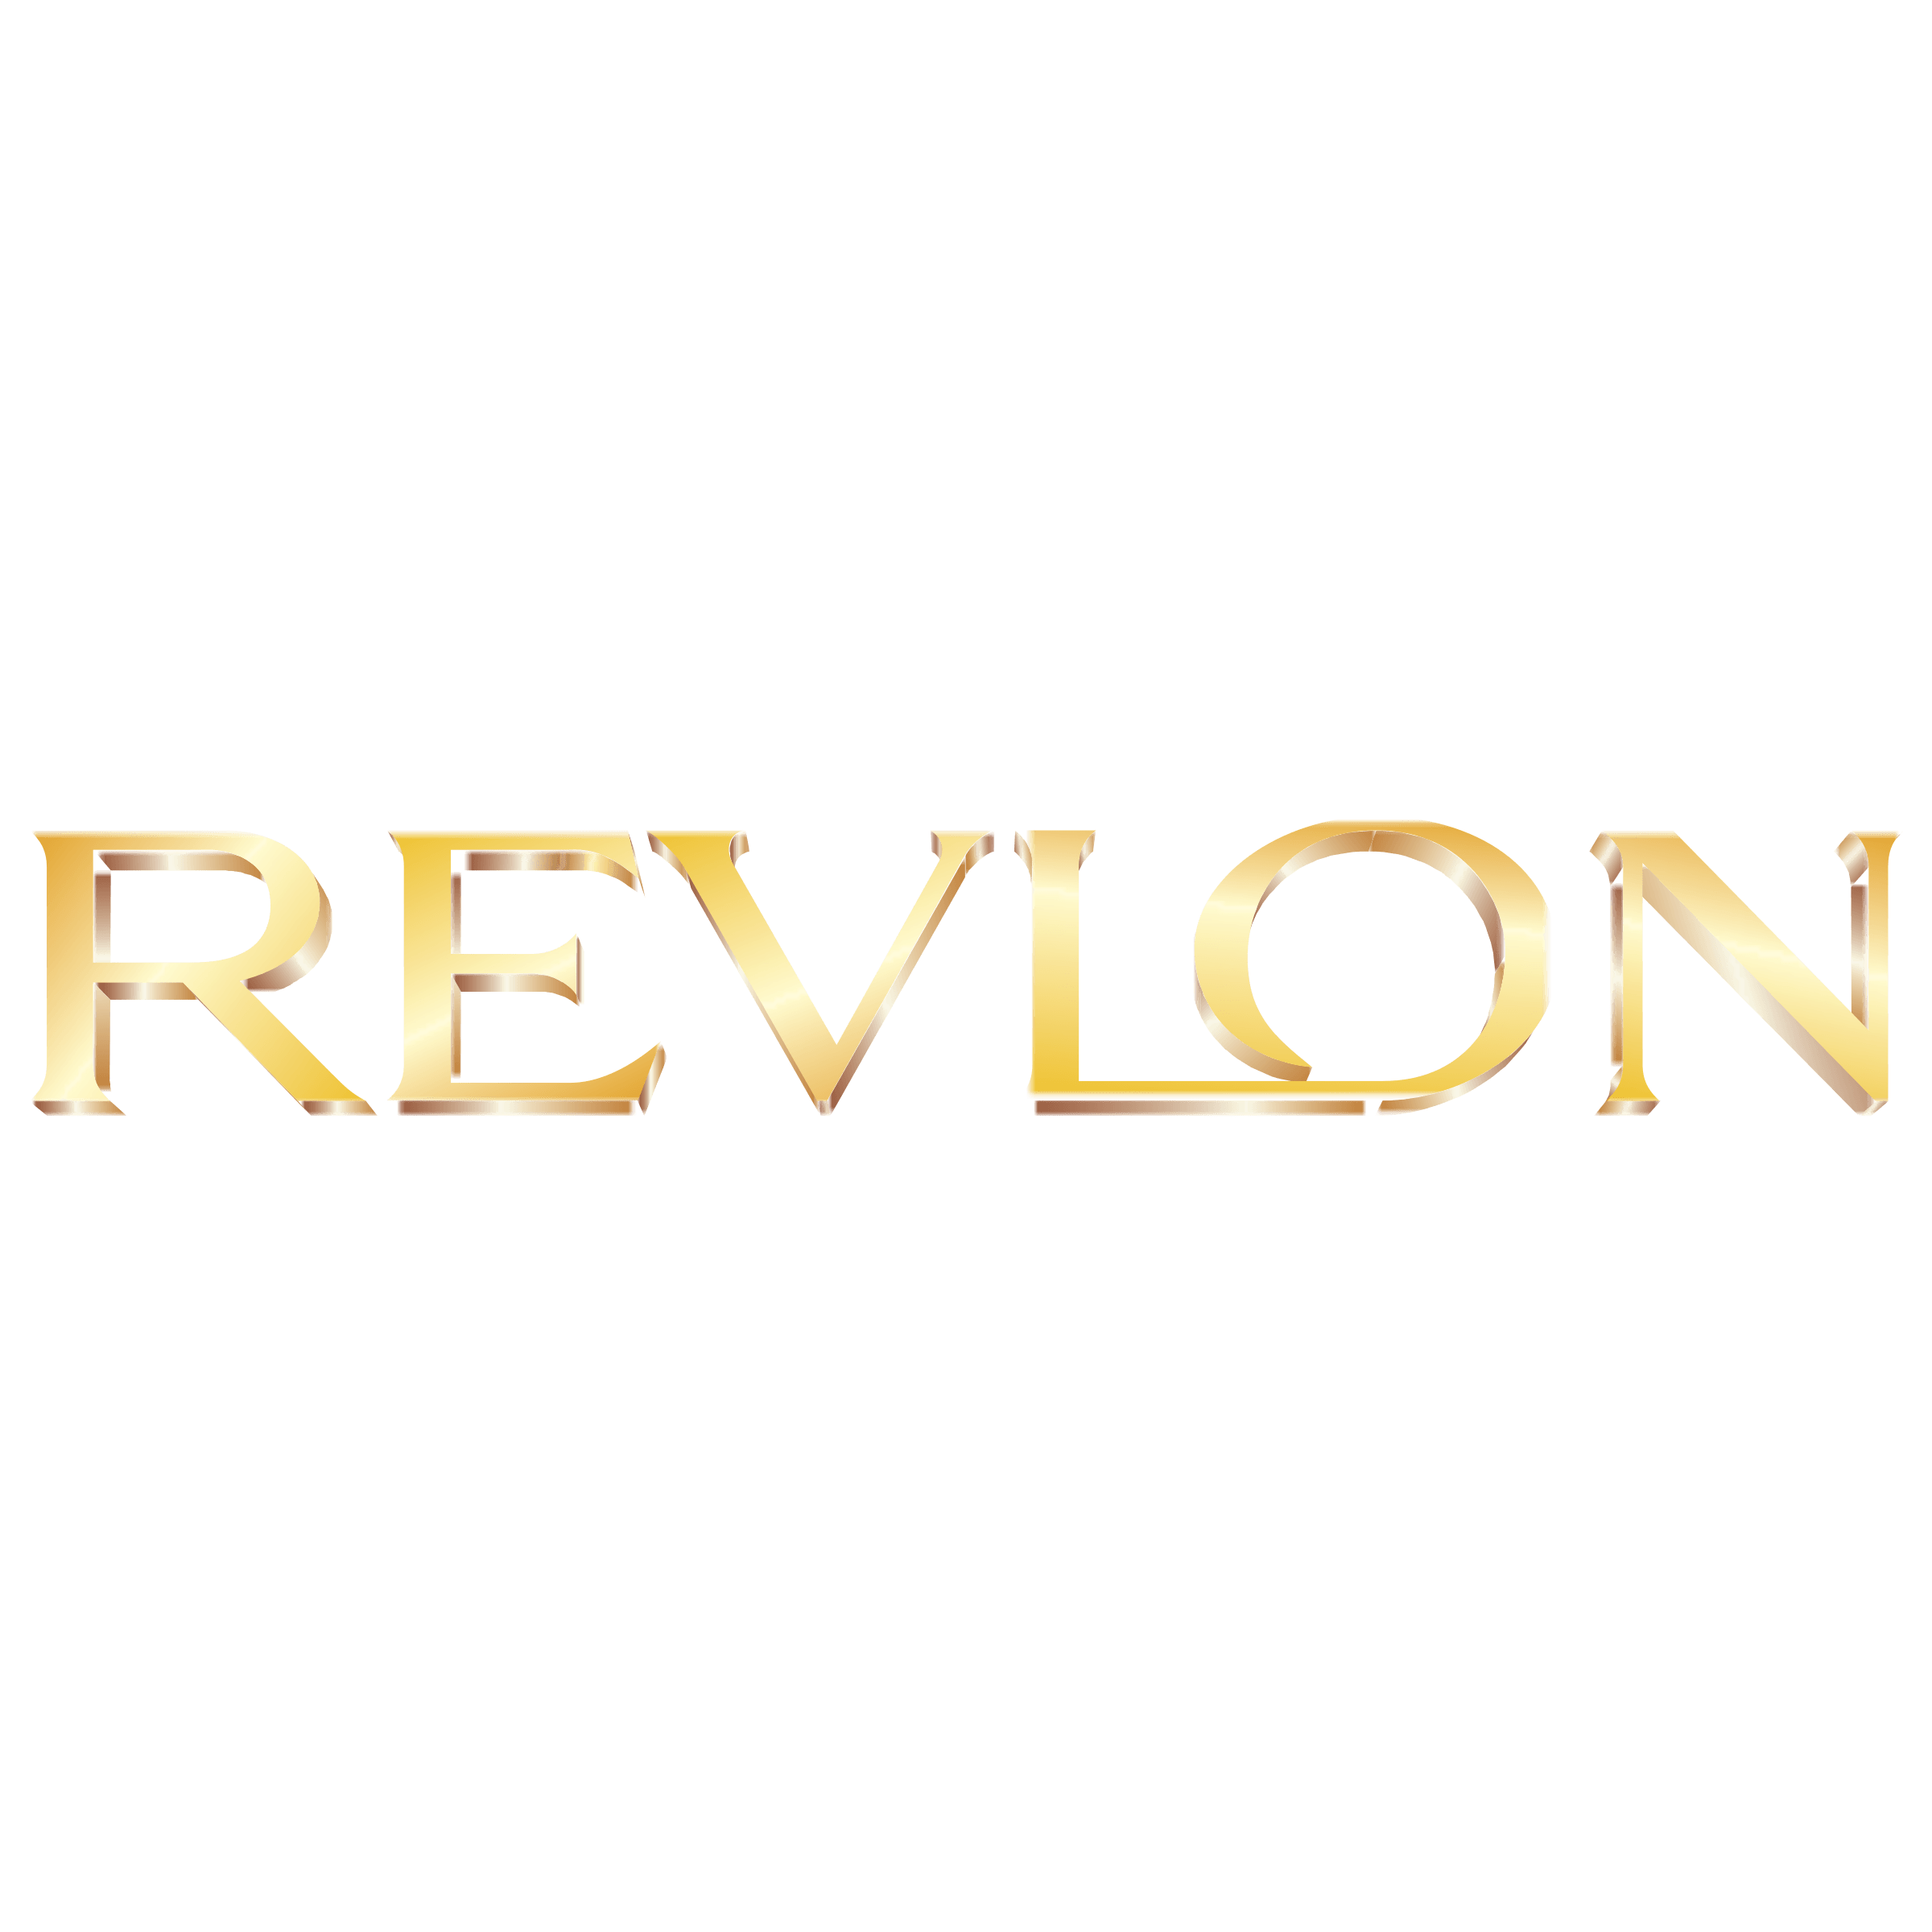 Revlon Logo - Revlon Logo PNG Transparent & SVG Vector